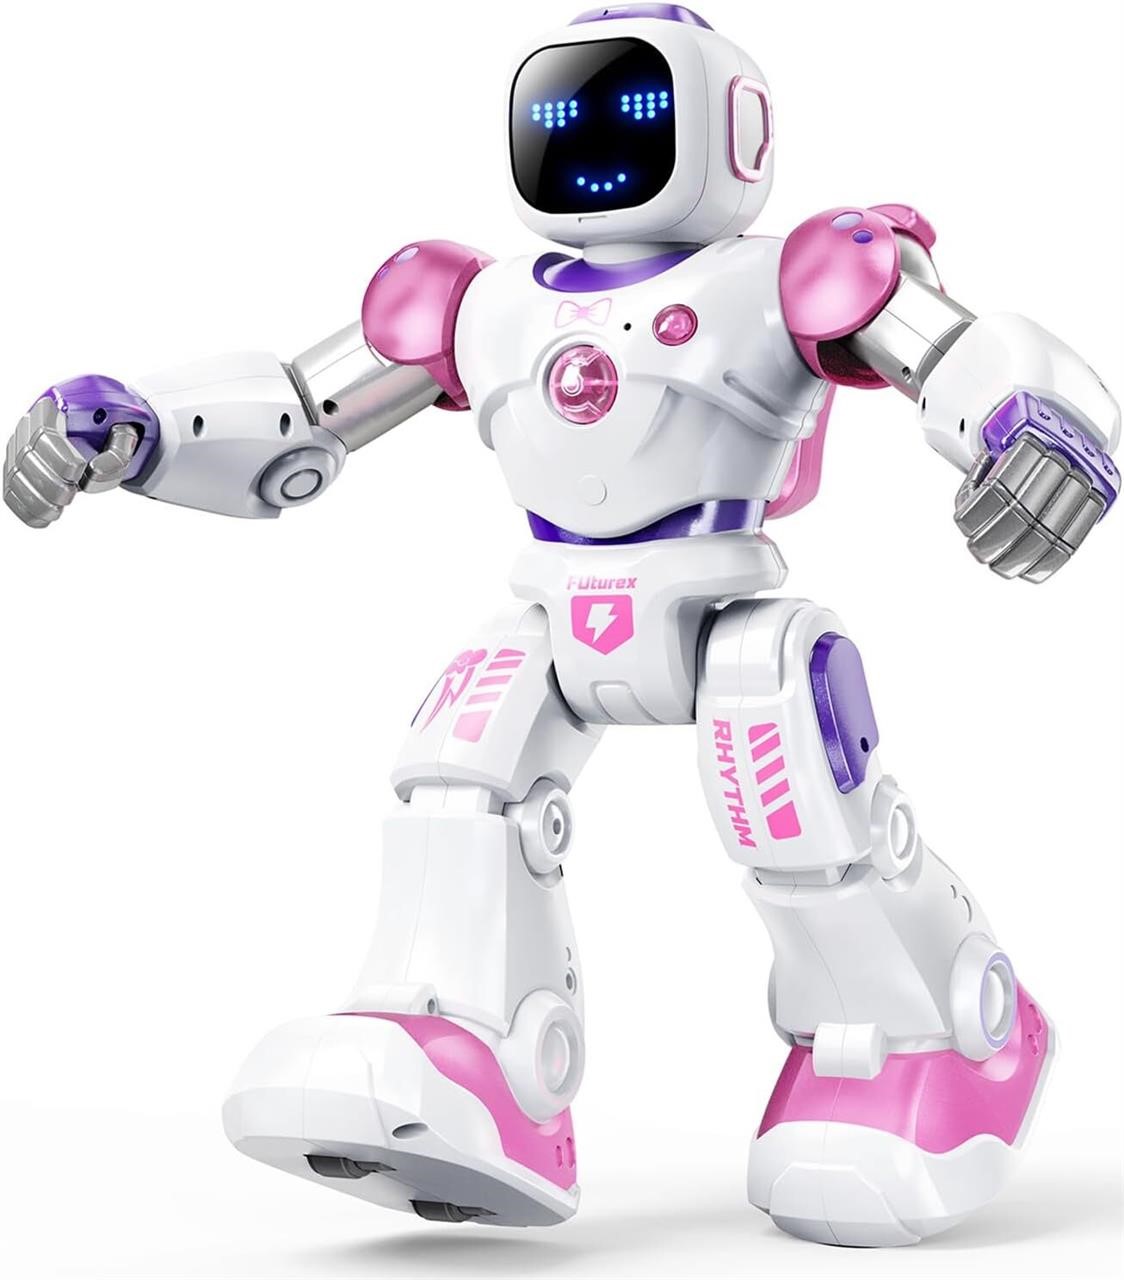 Ruko 1088 Smart Robot Toys for Kids (Pink).